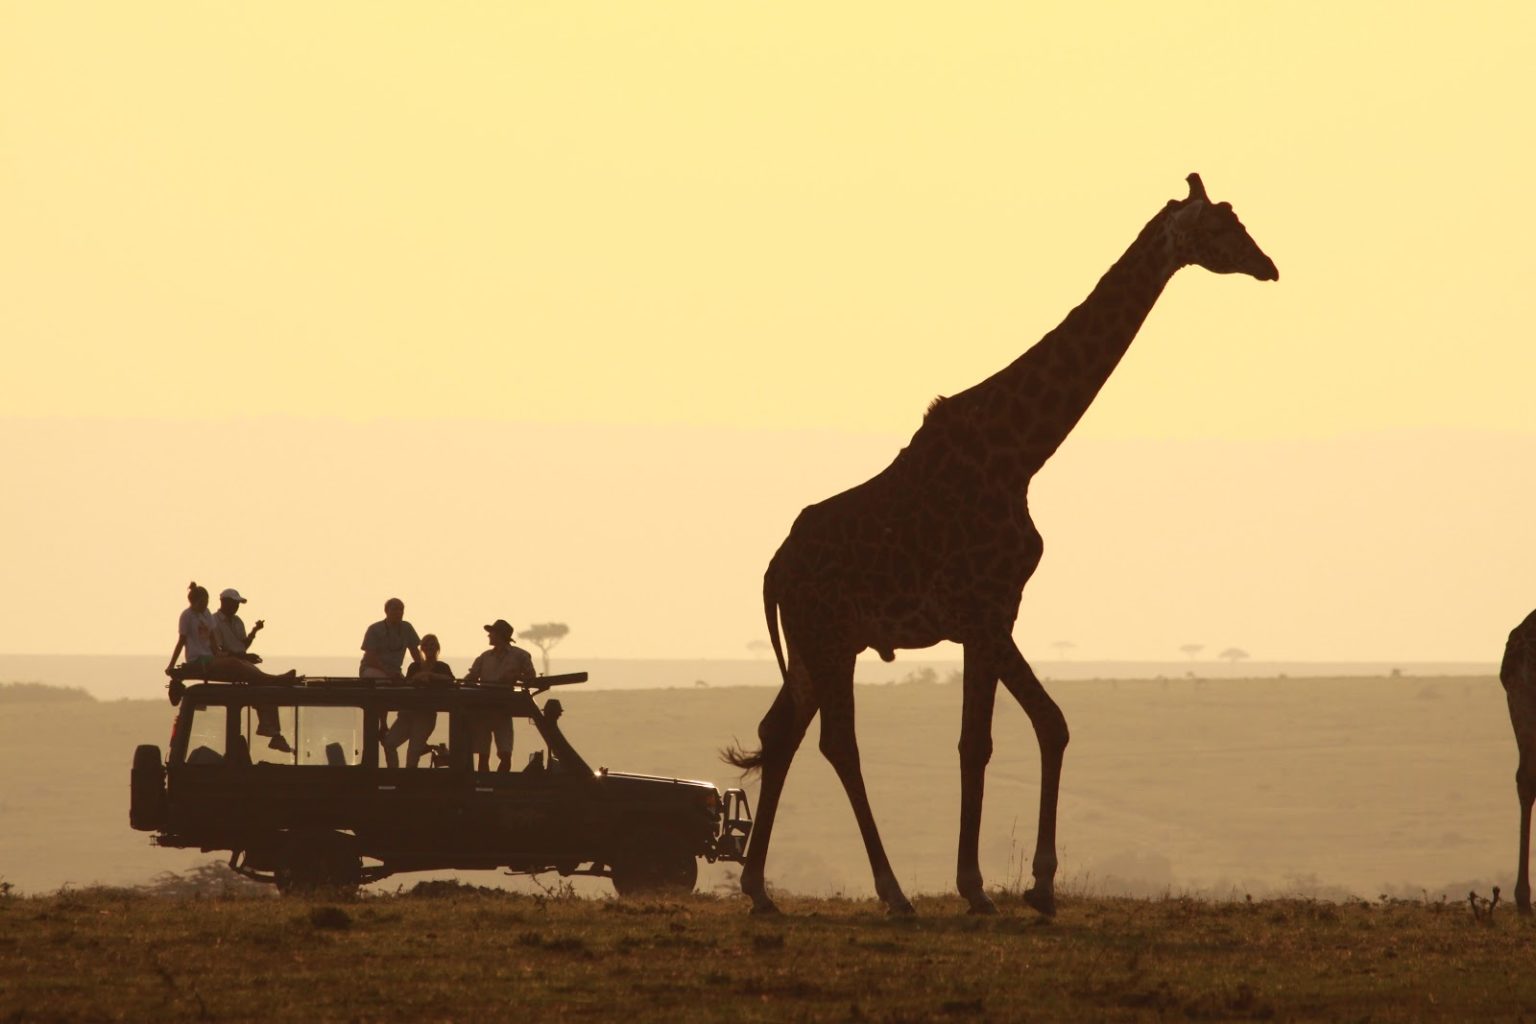 adventure Kenya safari vehicle observing a a giraffe on a game drive